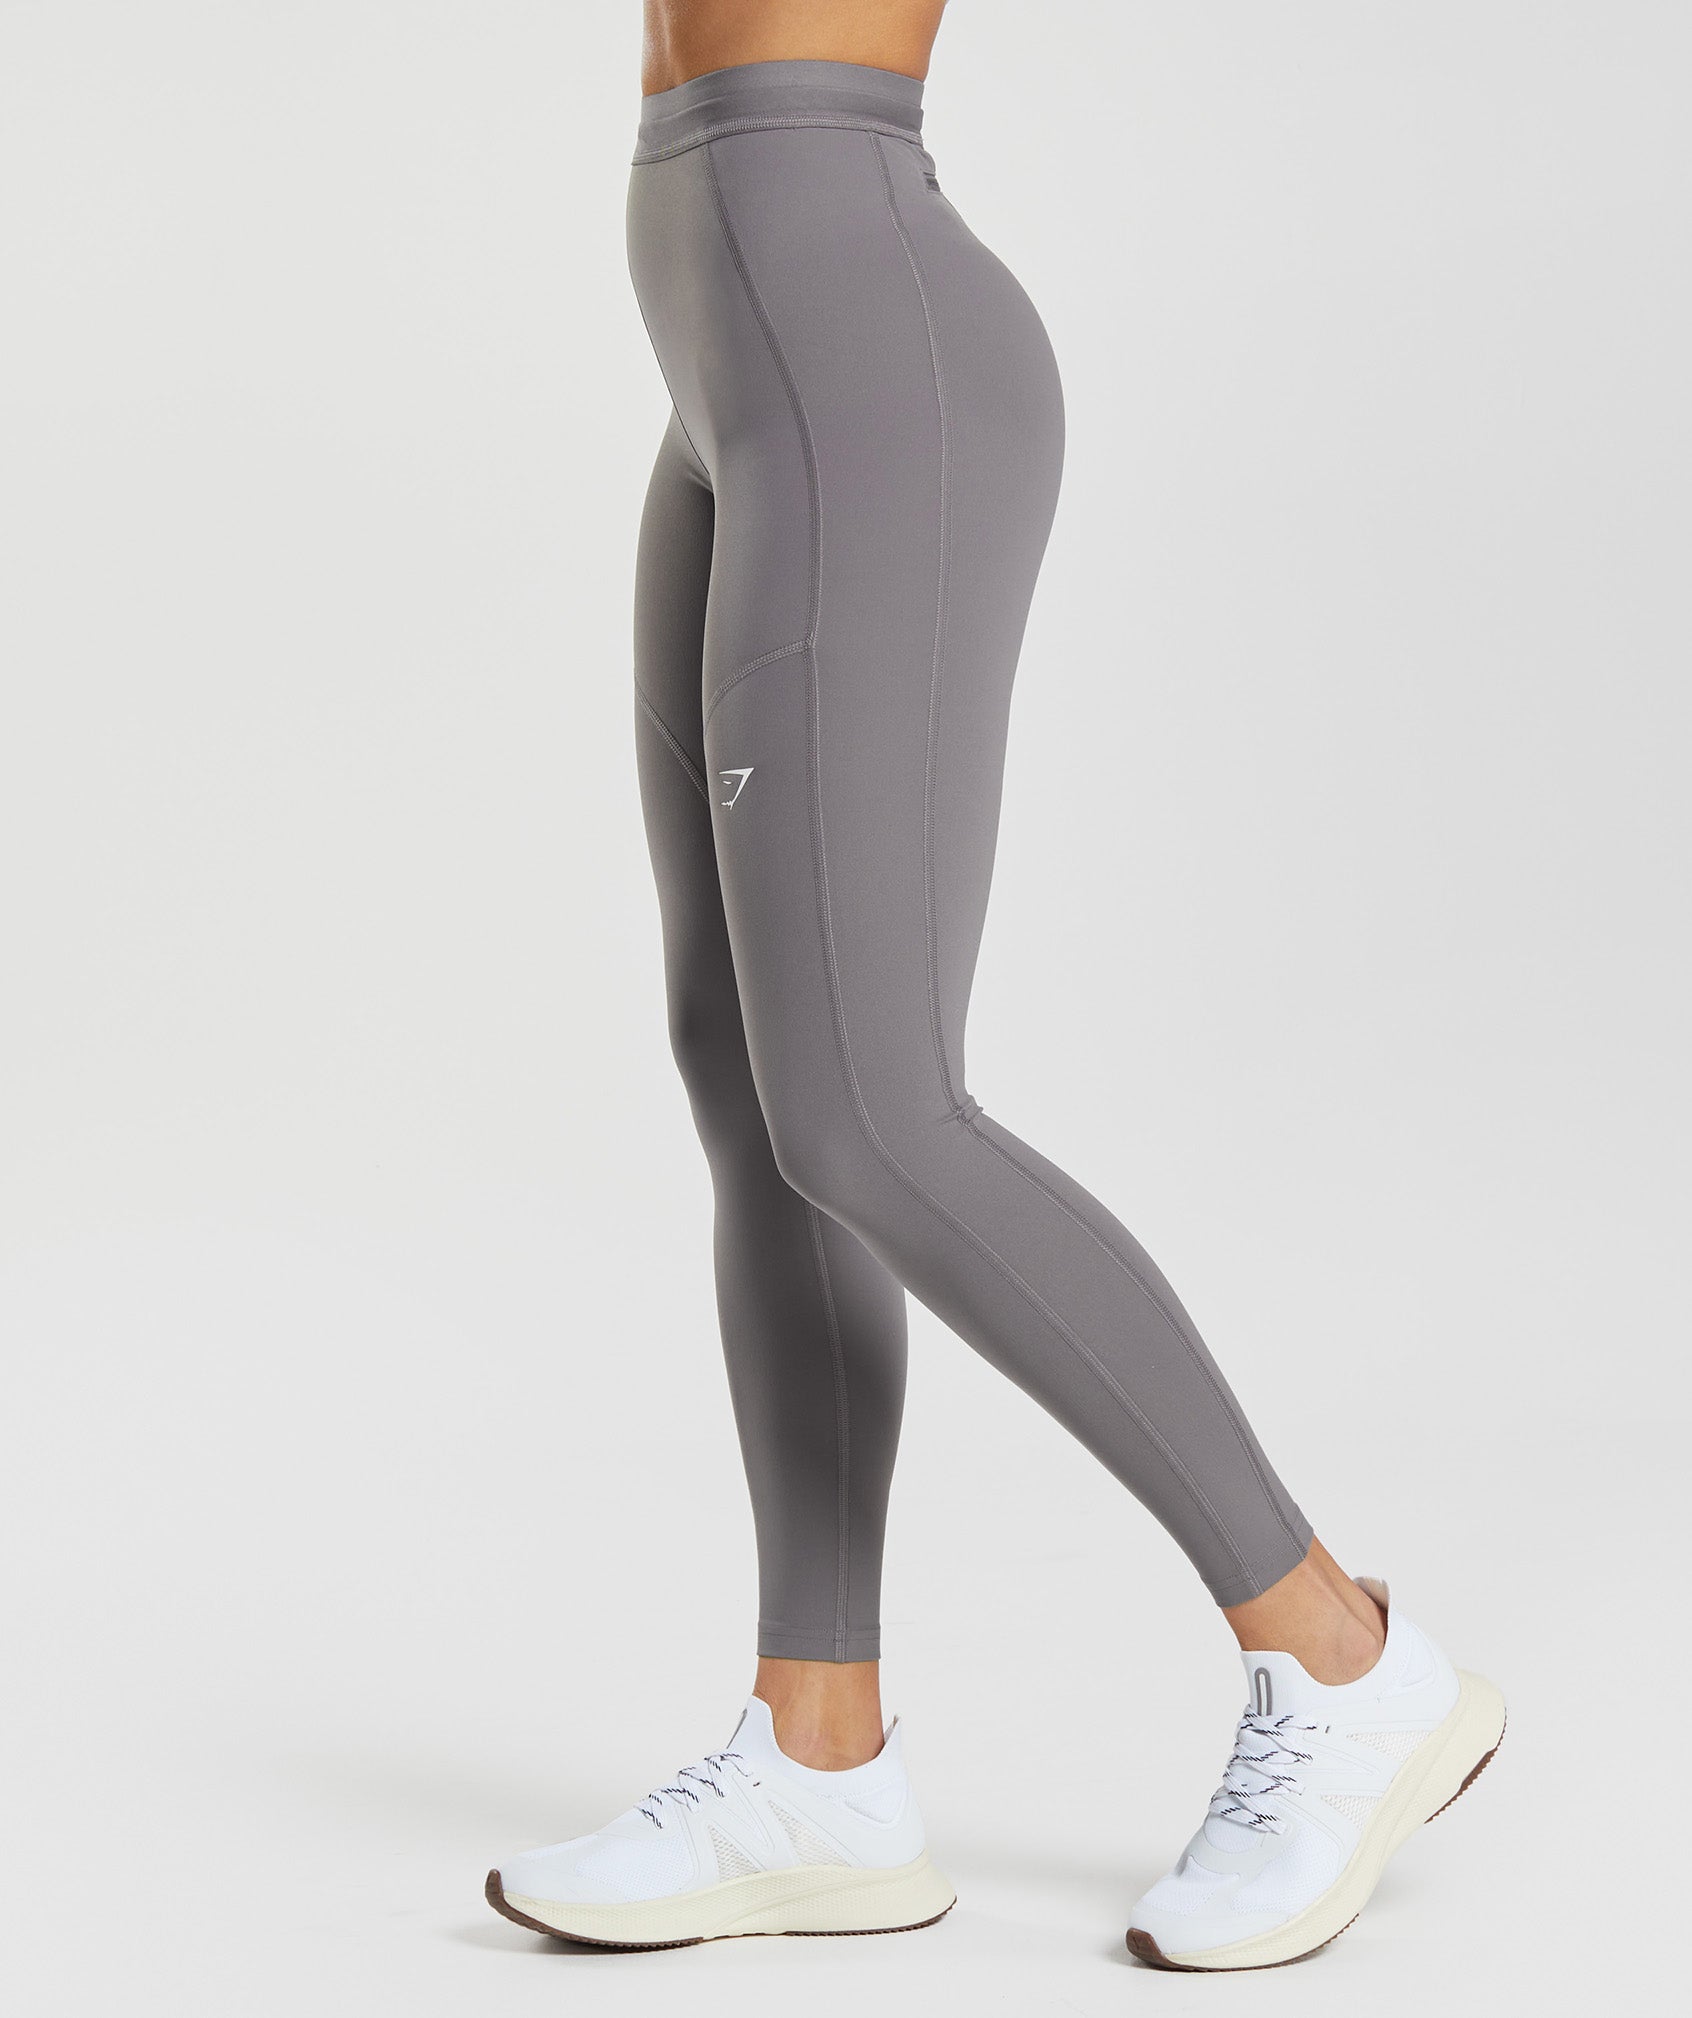 Grey Women's Running Tights Size XL